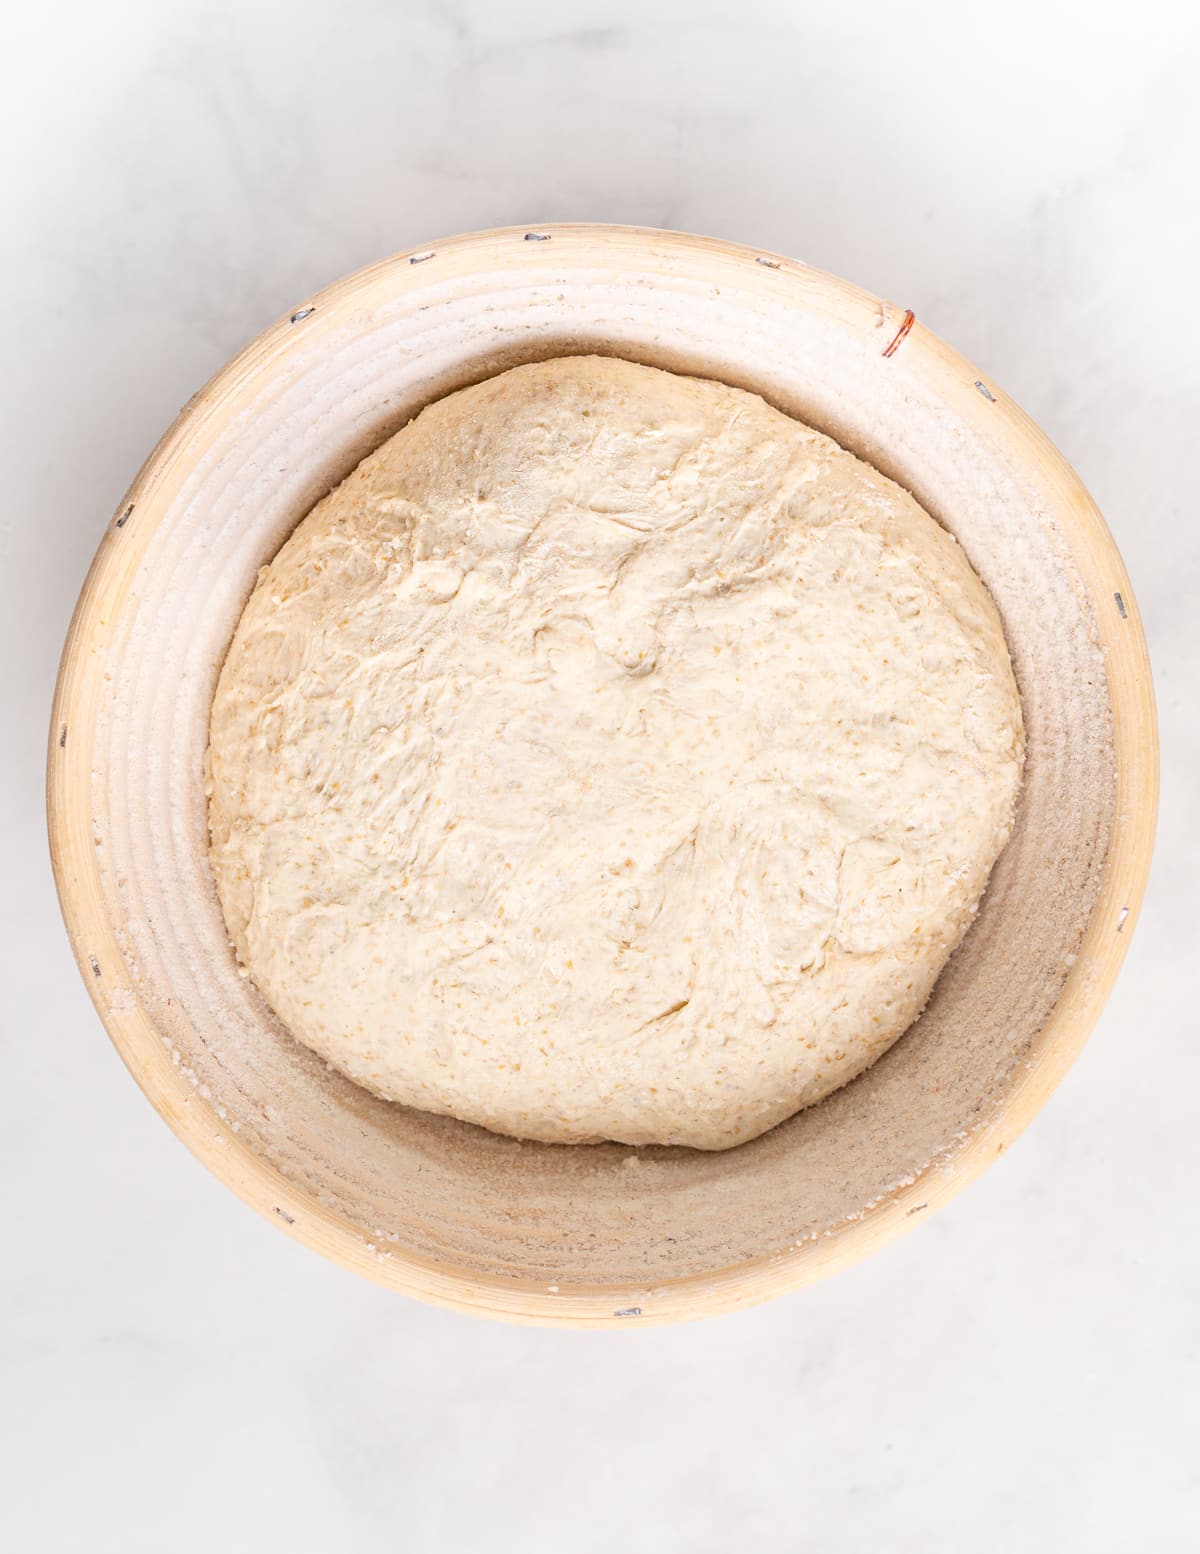 shaped sourdough bread dough in a floured banneton